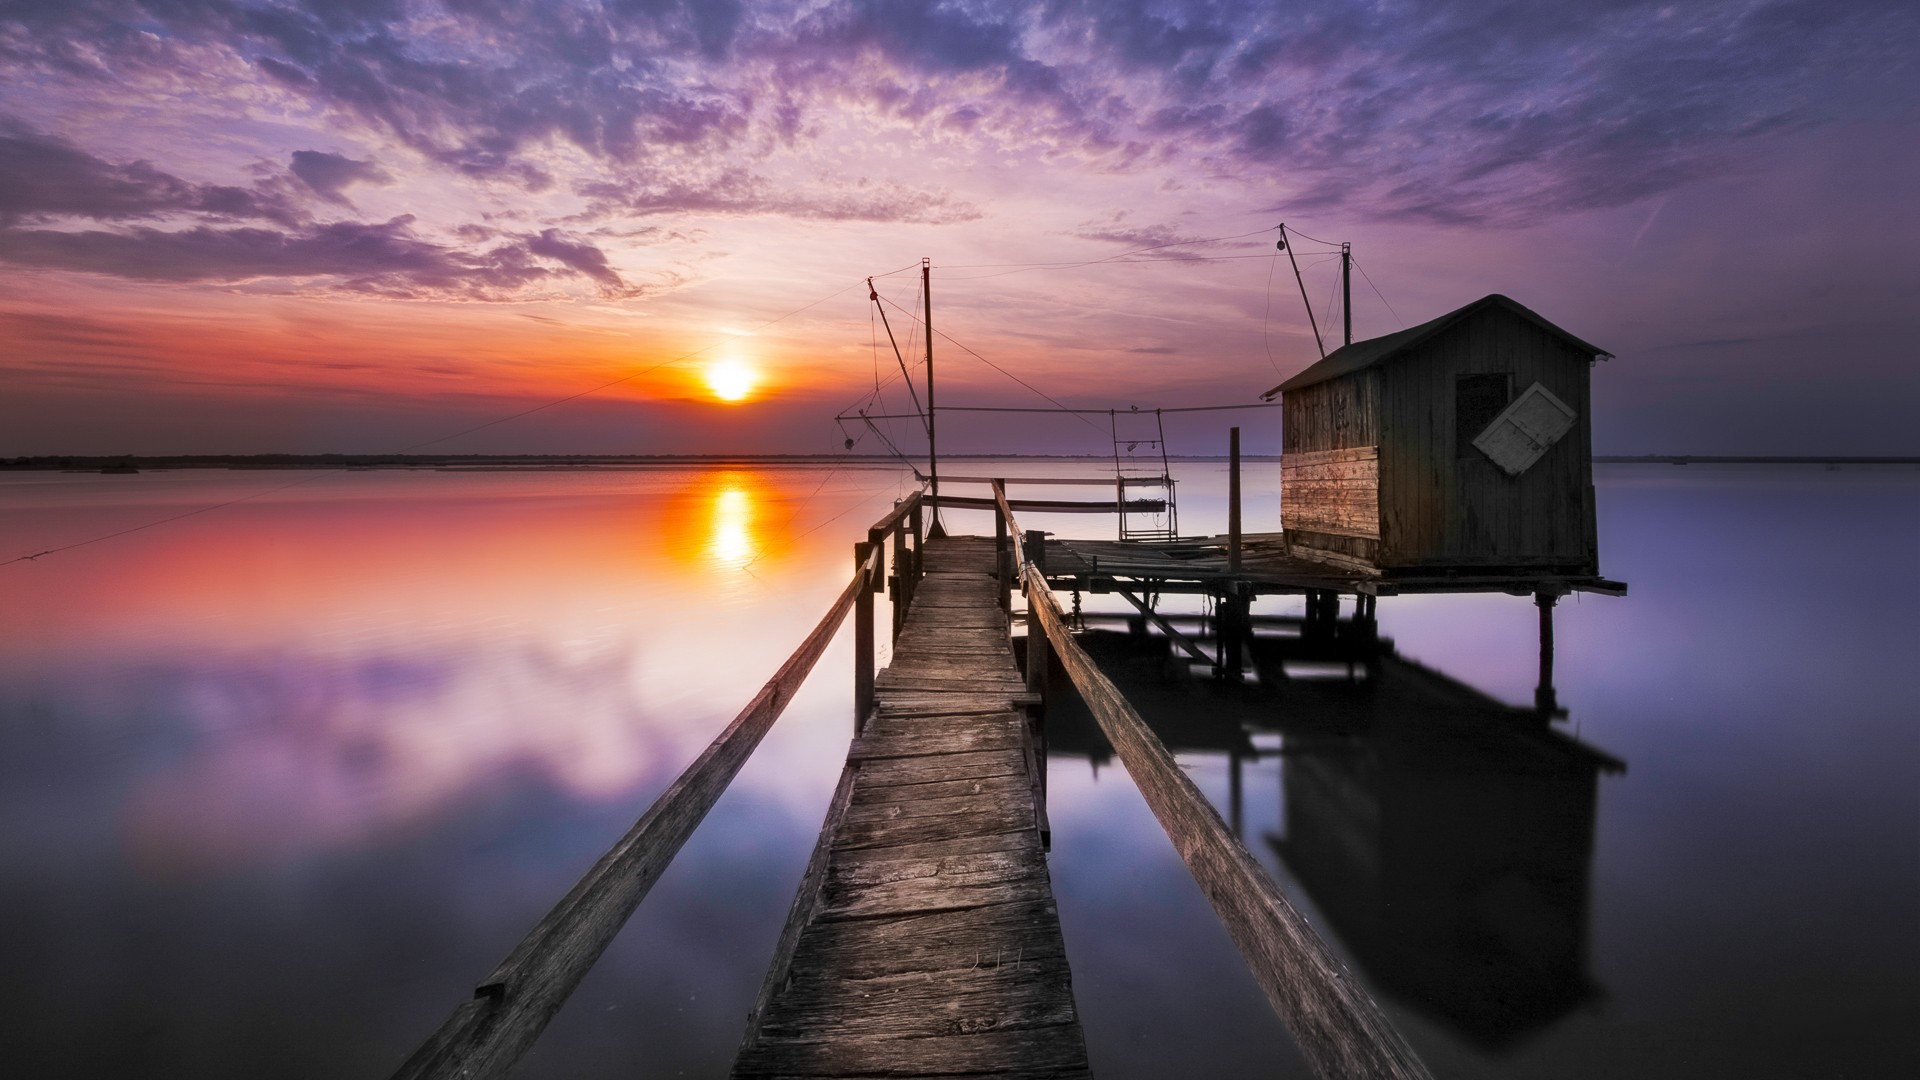 Sunset on a wooden pier